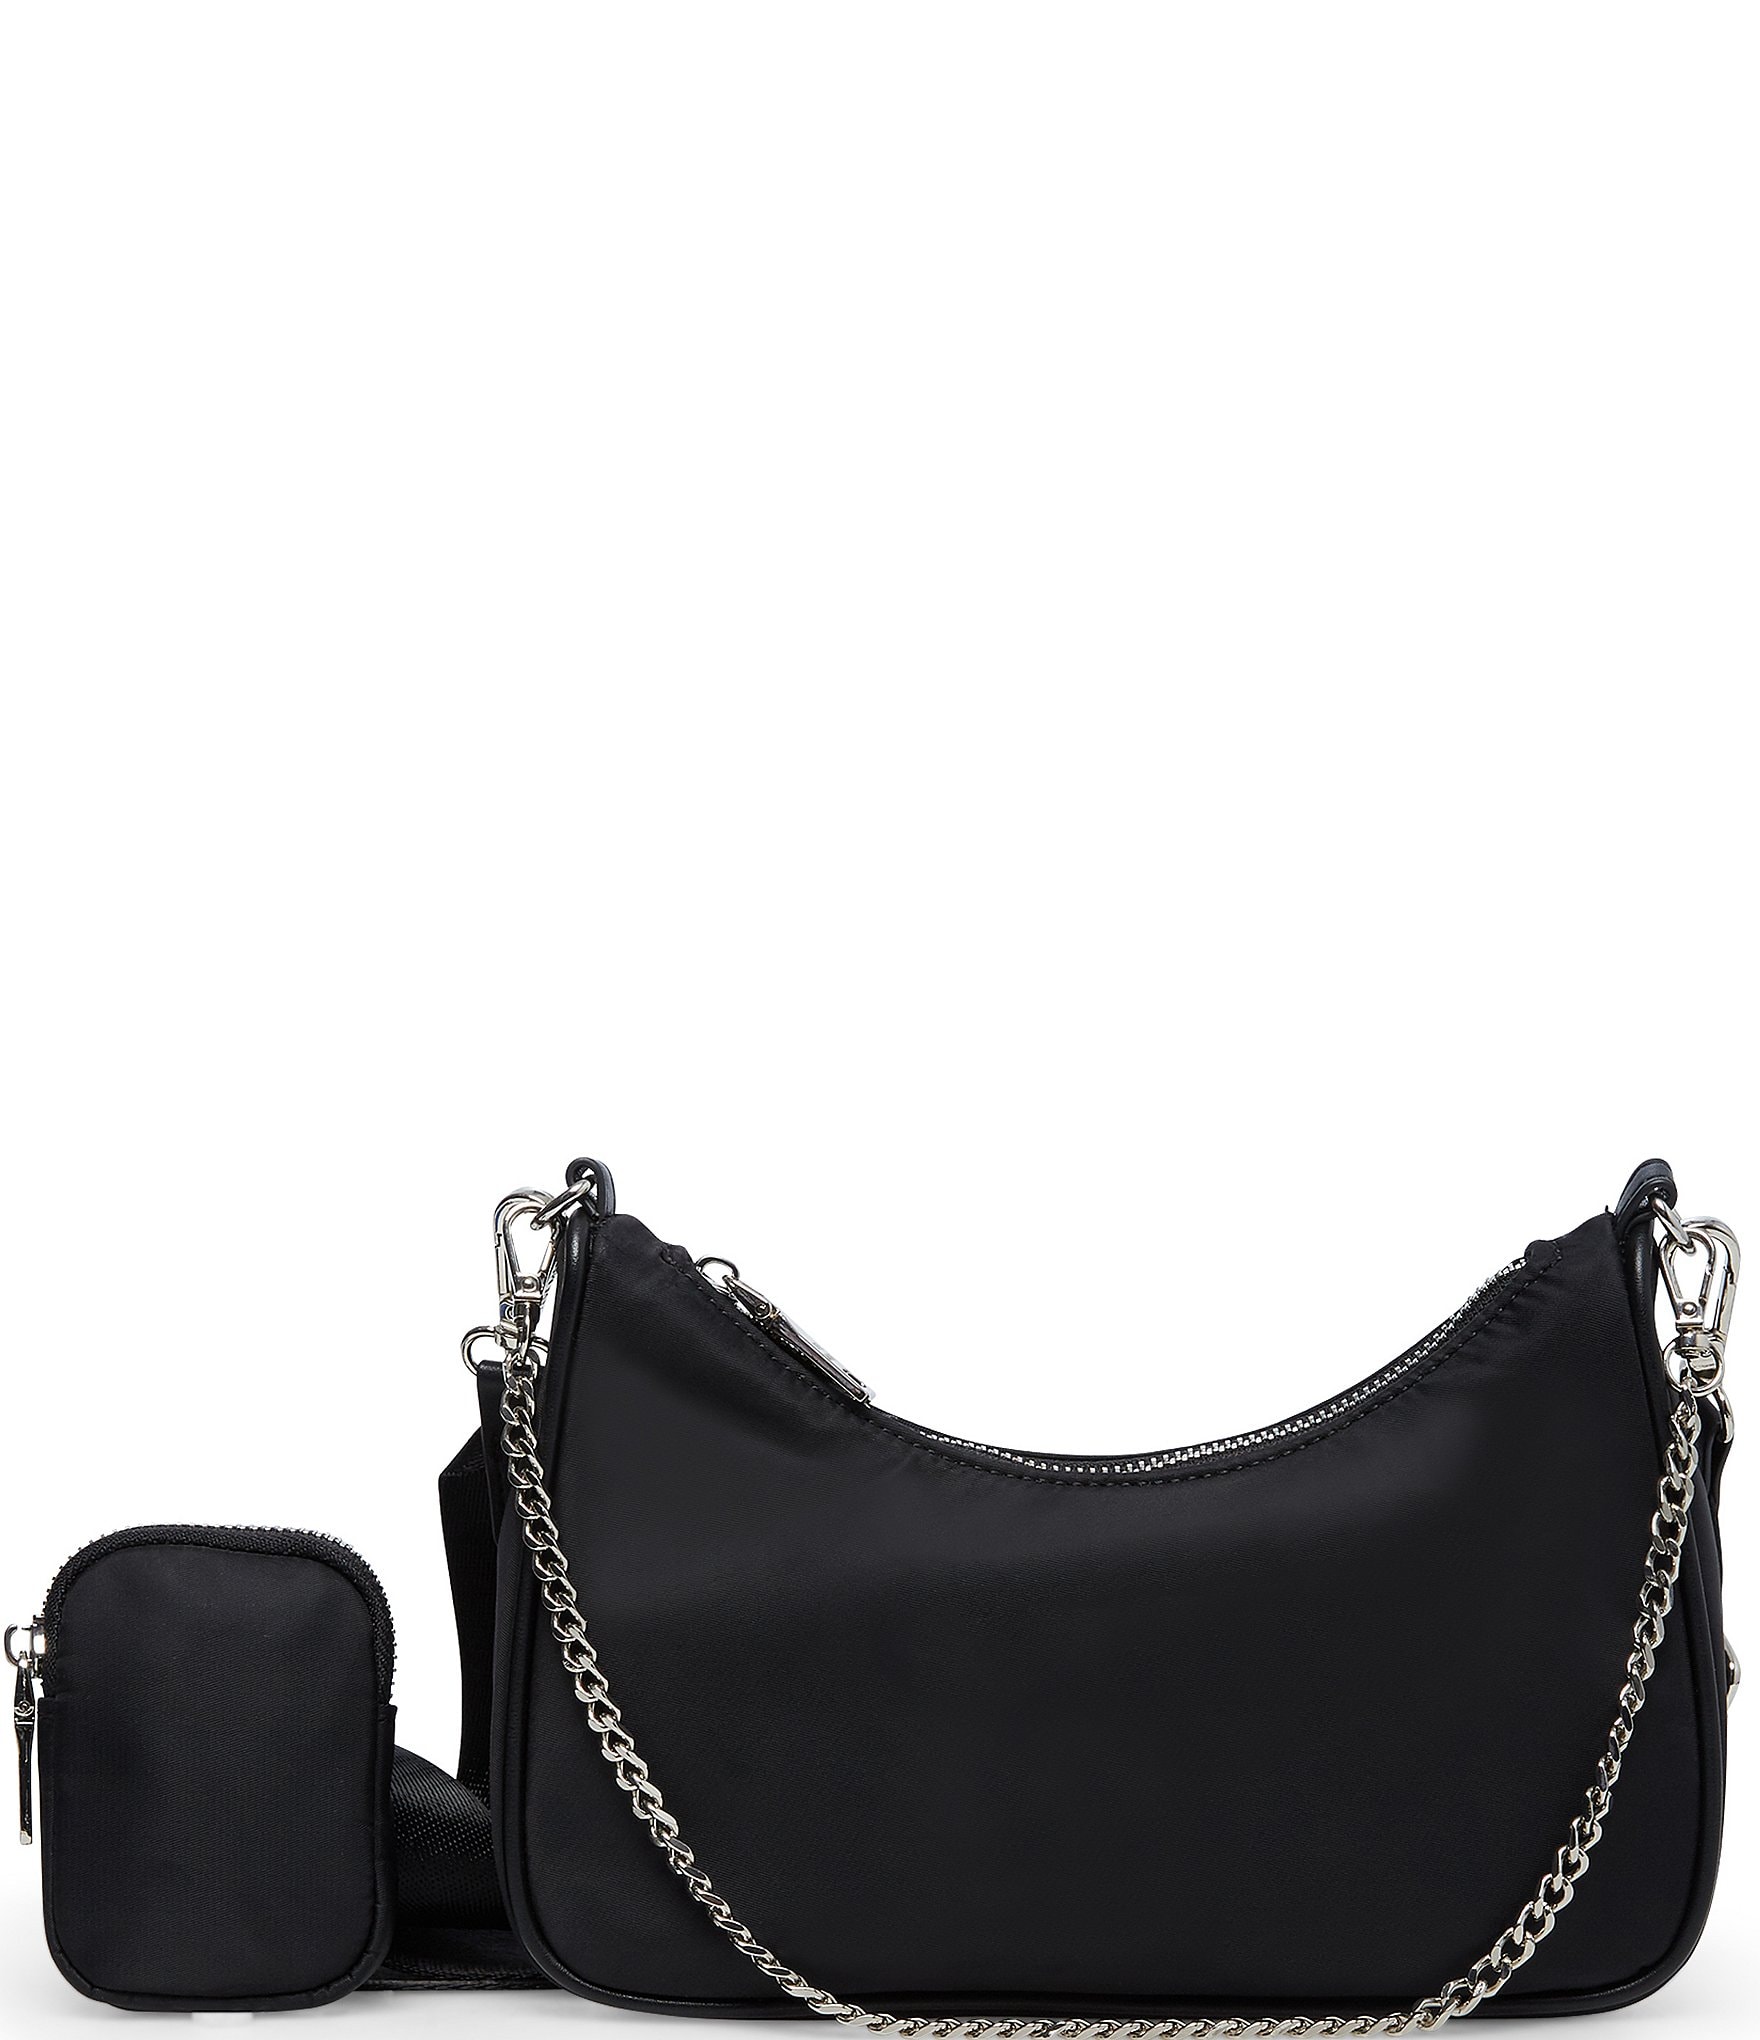 Steve Madden Bvital Cross Body Bag With Chain Strap in Black